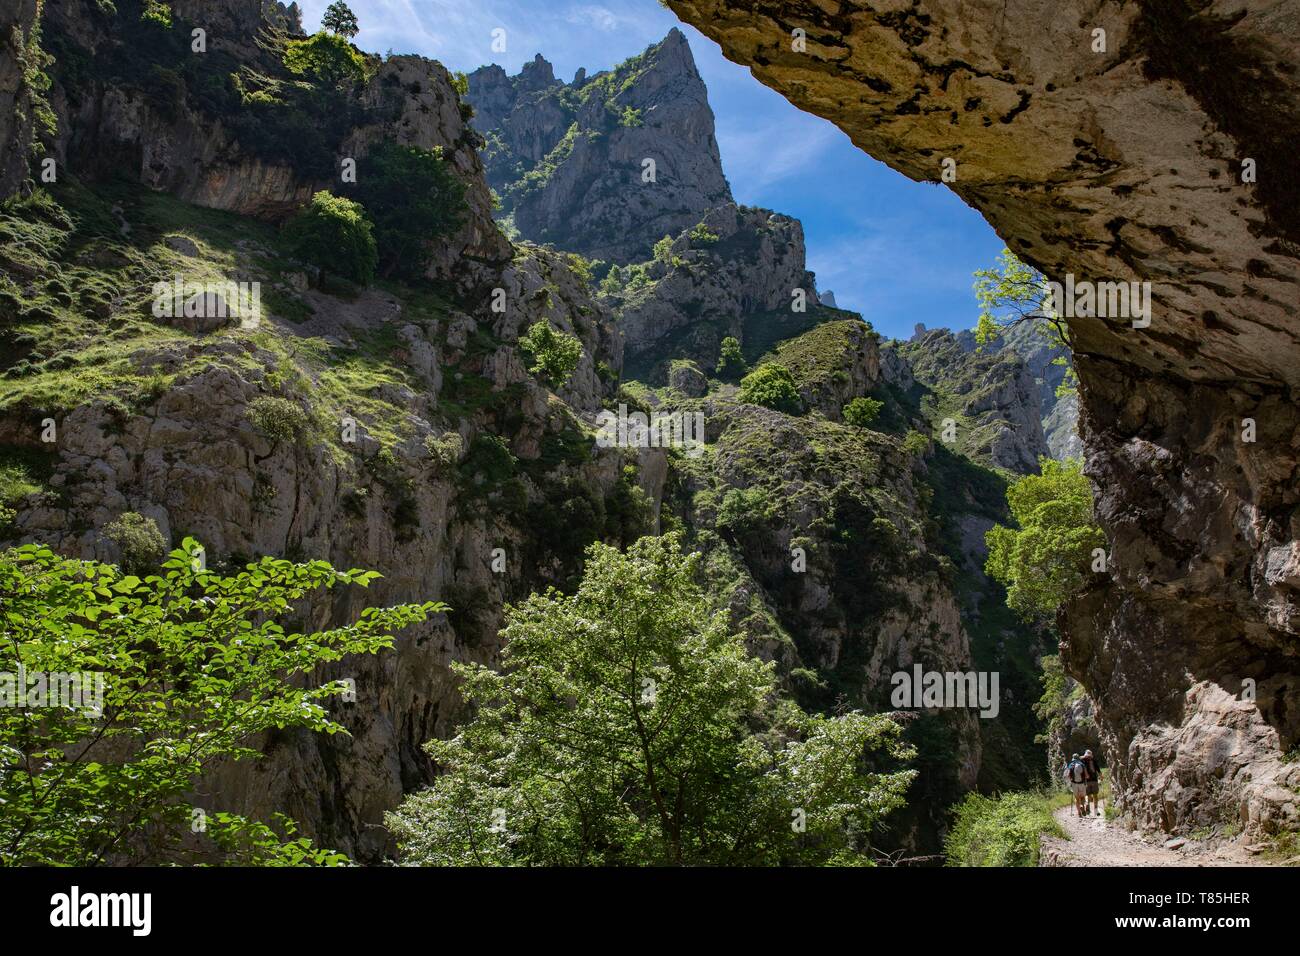 Spain, Community of Asturias, Picos de Europa National Park, Arenas de Cabrales, hikers on the Cares Trail, Cares Gorge Stock Photo